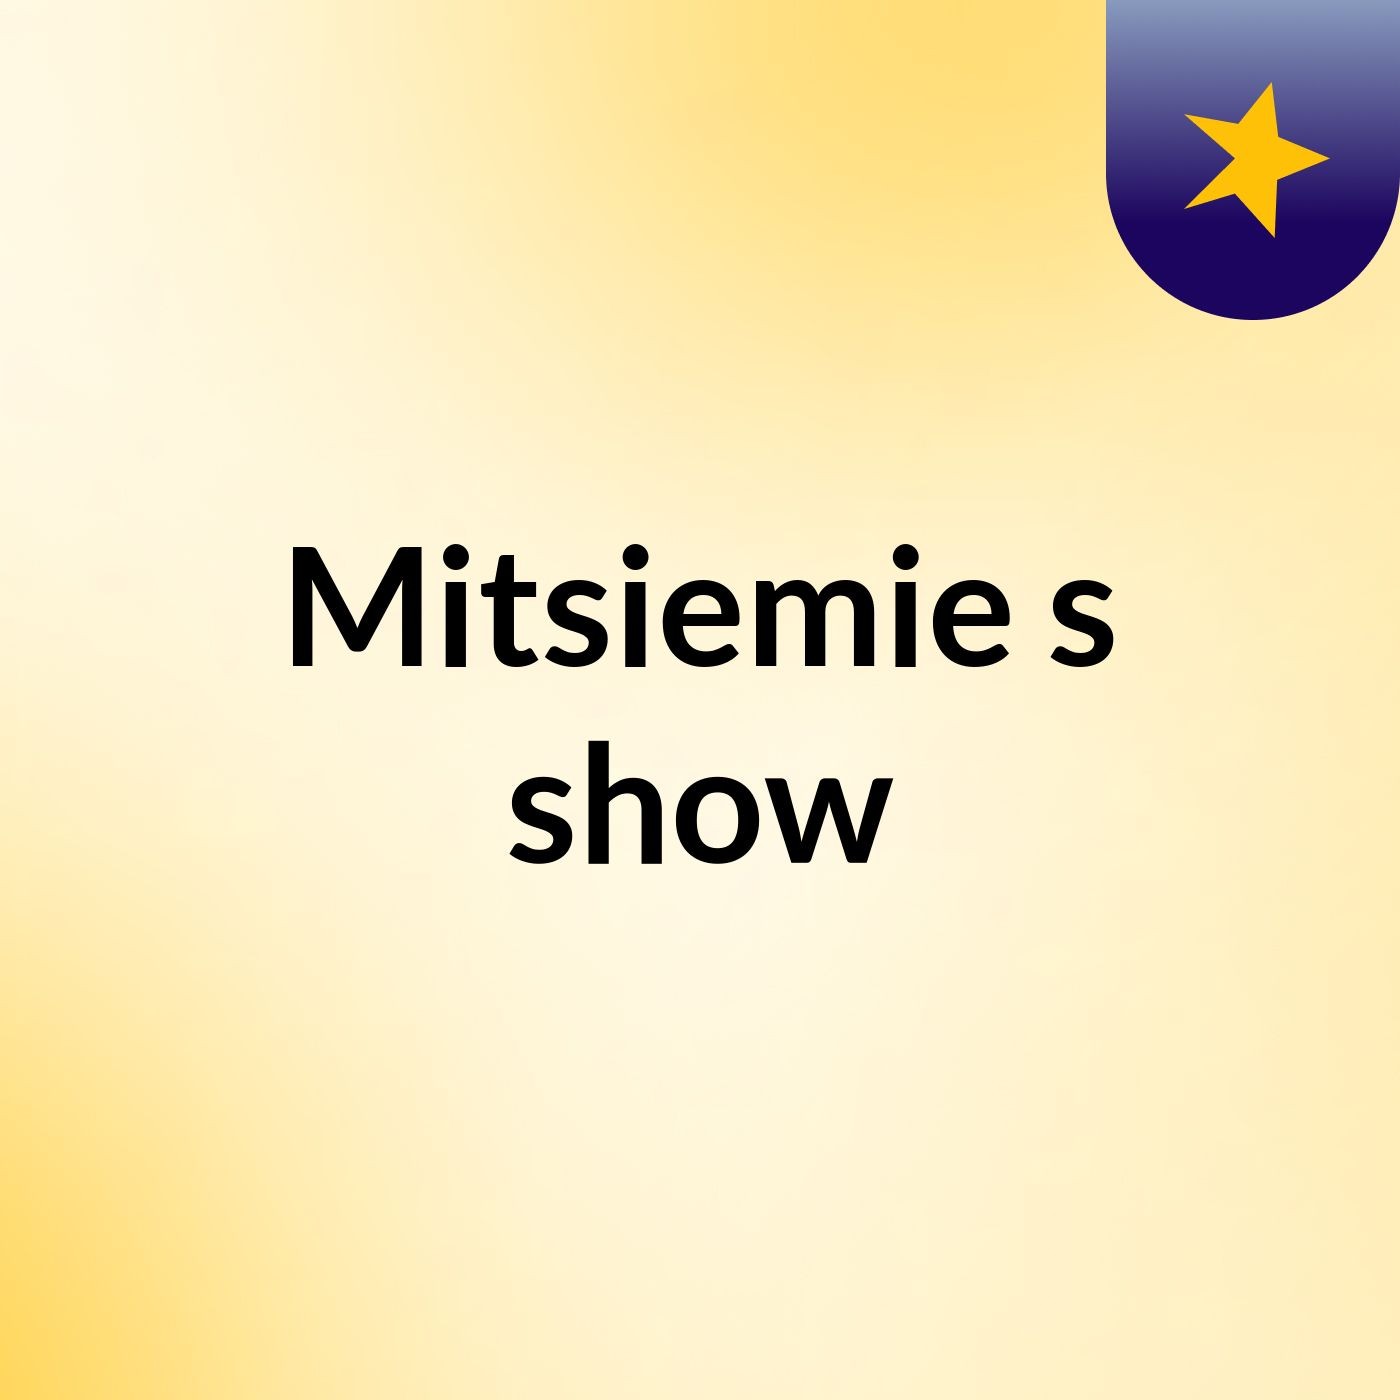 Mitsiemie's show